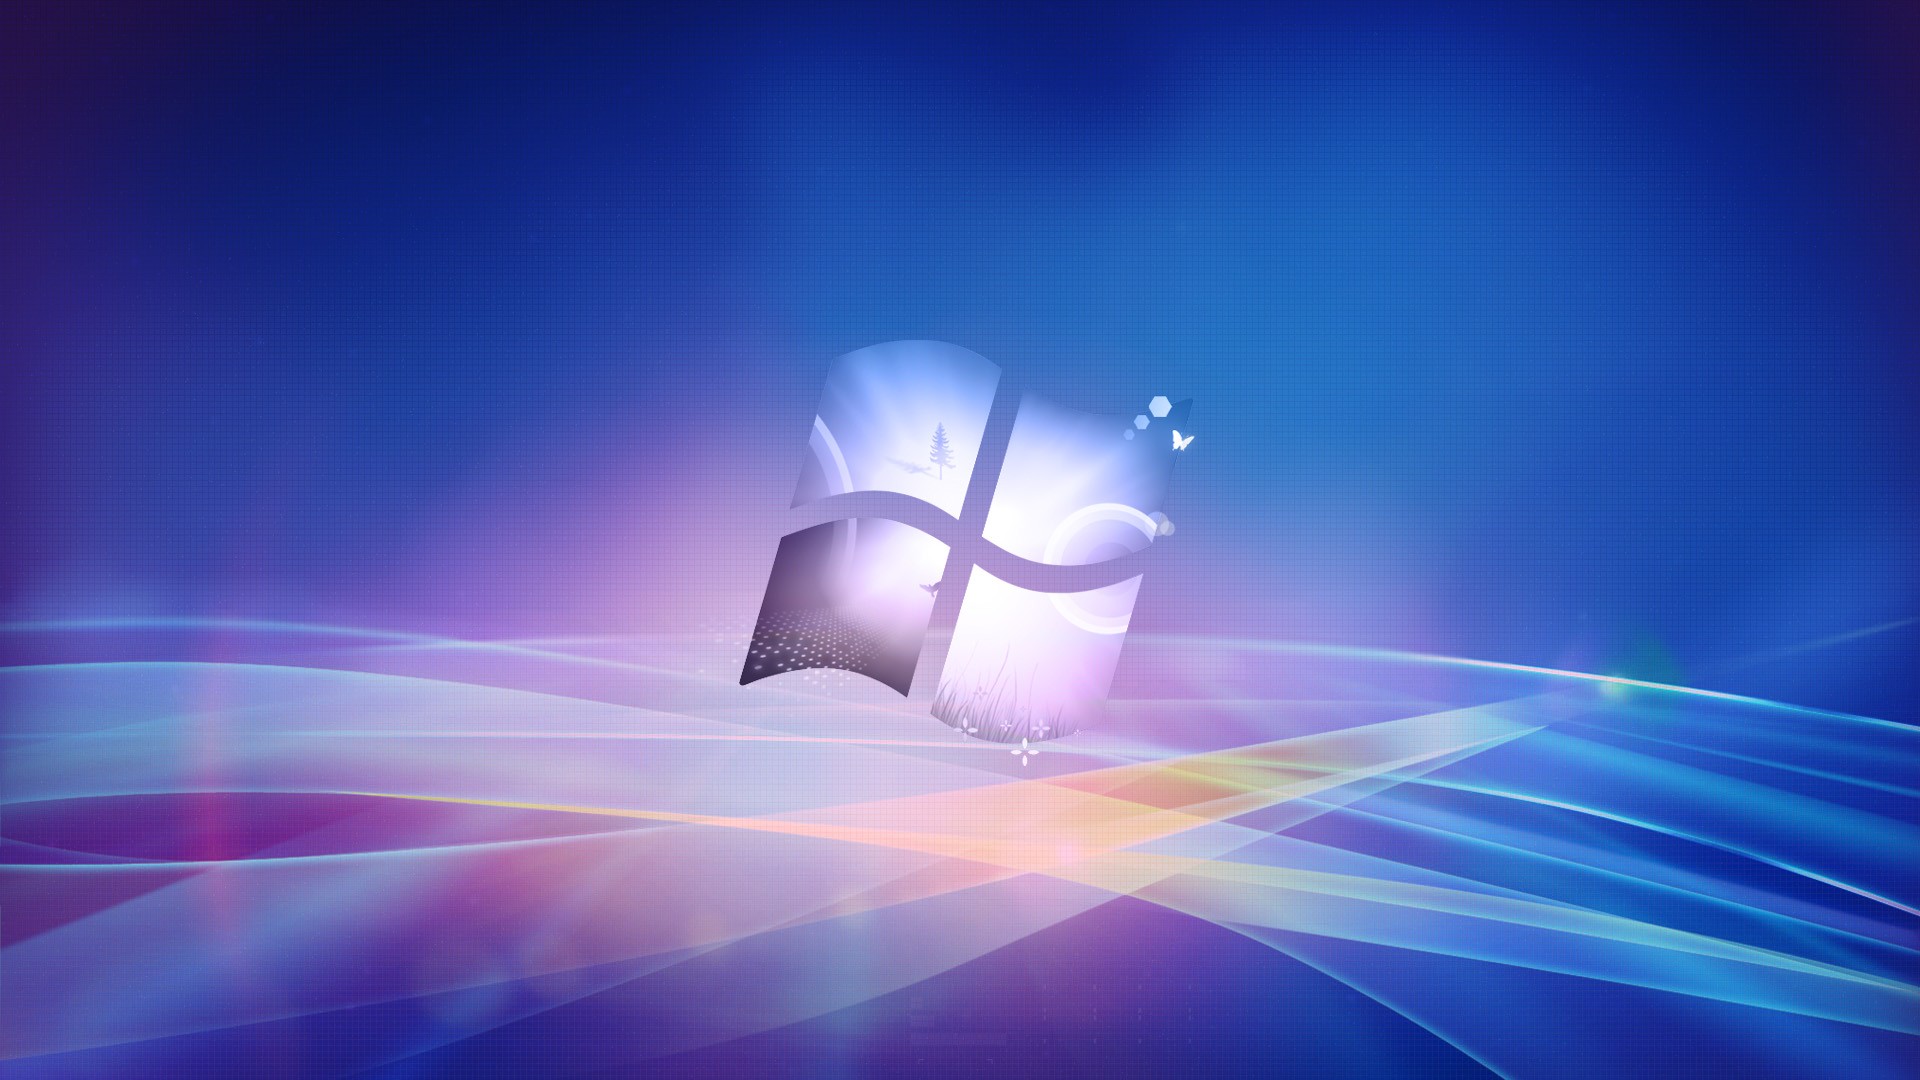 Windows 10 Animated Desktop Backgrounds - Windows 10 Backgrounds